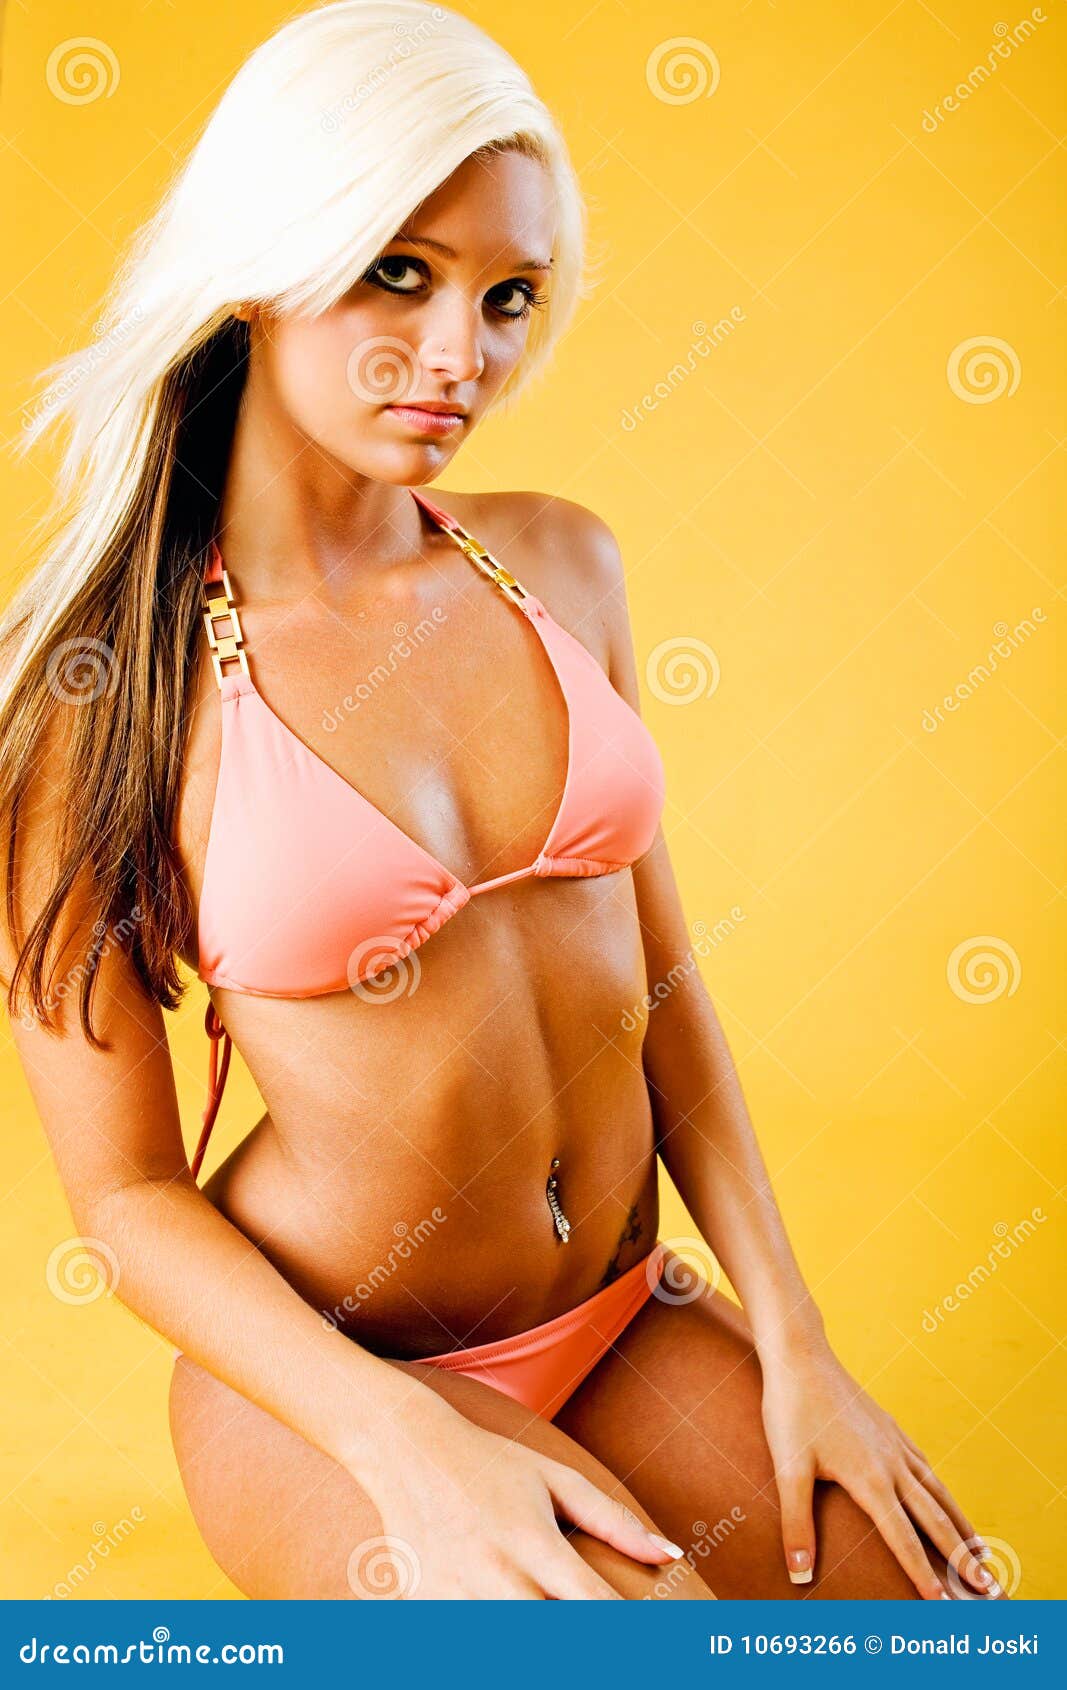 Hot Blonde Bikini Pics